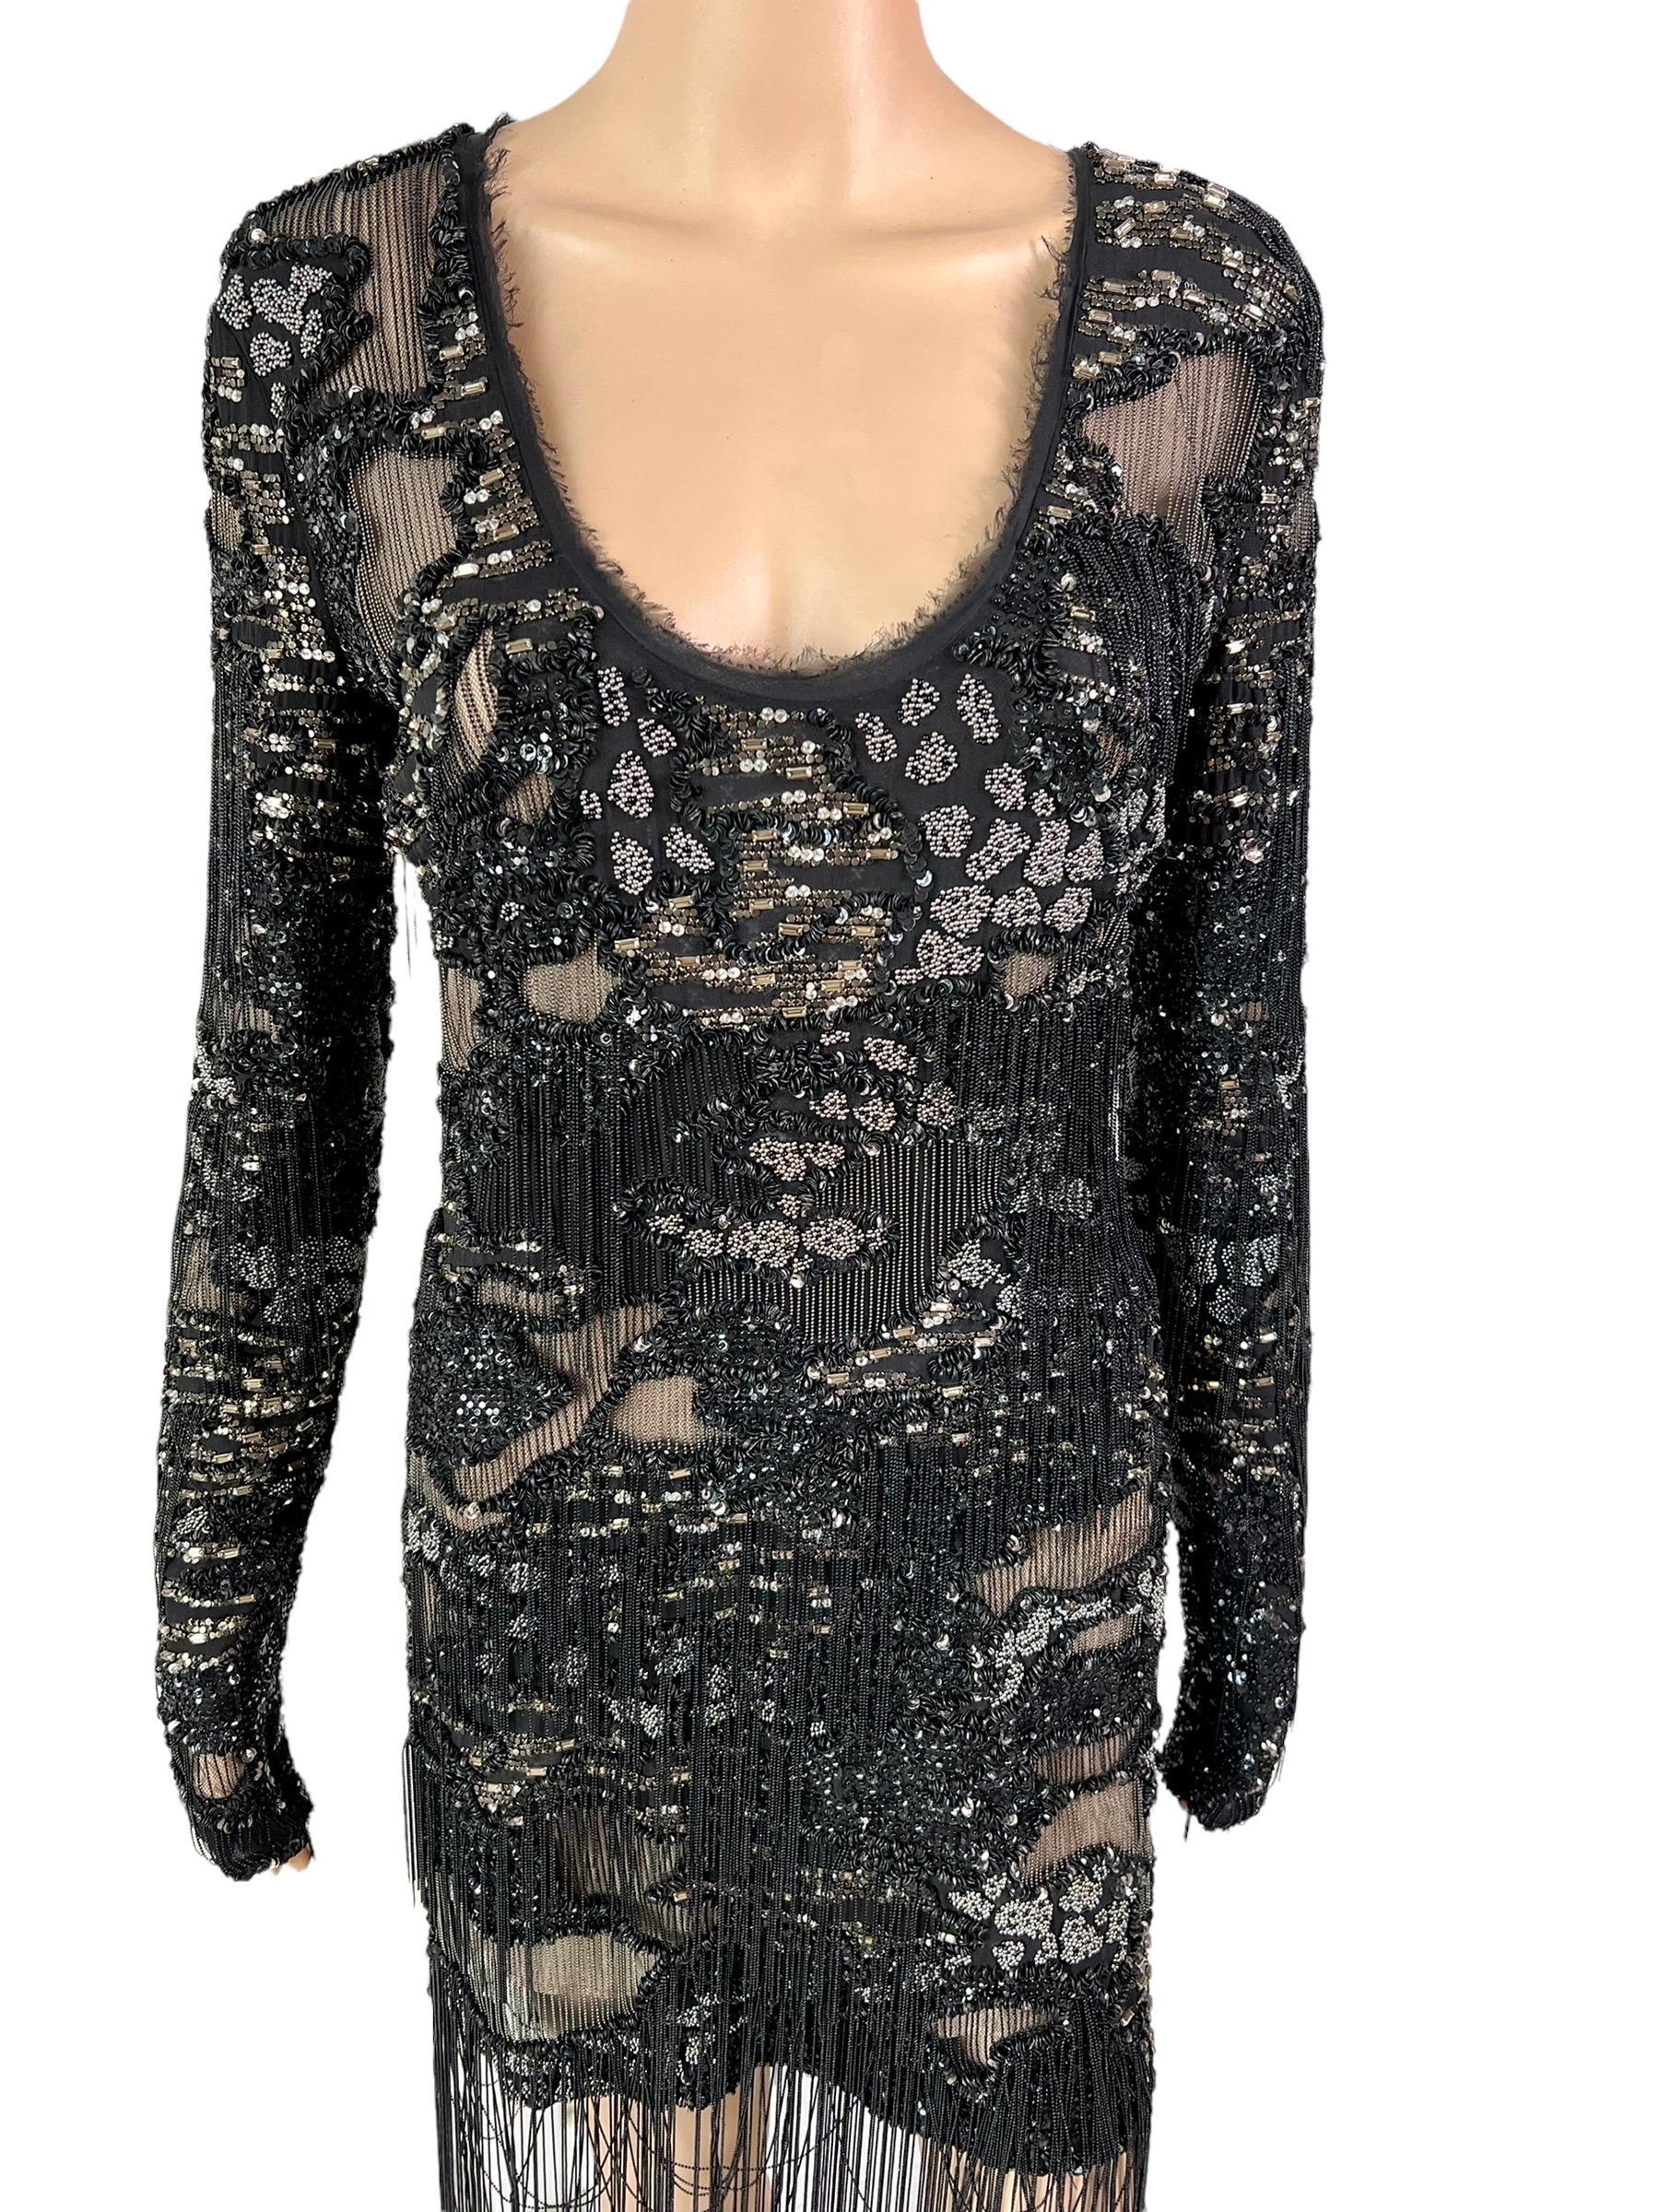 Women's Roberto Cavalli S/S 2016 Runway Embellished Chain Sheer Black Mini Evening Dress For Sale